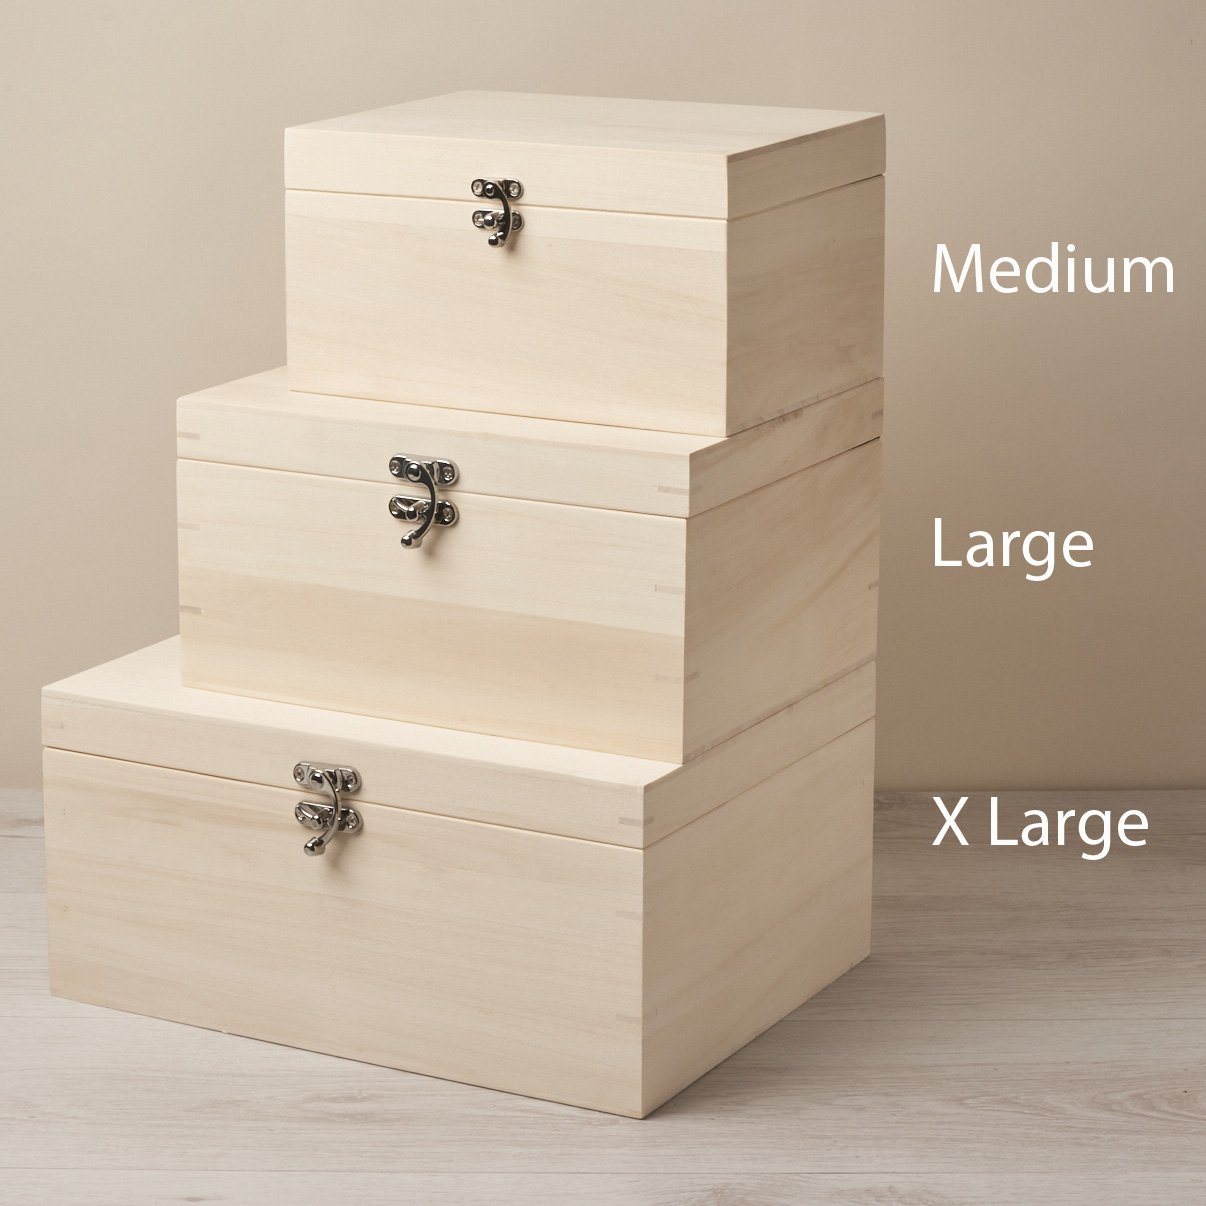 Christening Box - Personalised Laser Engraved Wooden Baby Memory Keepsake Box With Hinged Lid - Teddy Design